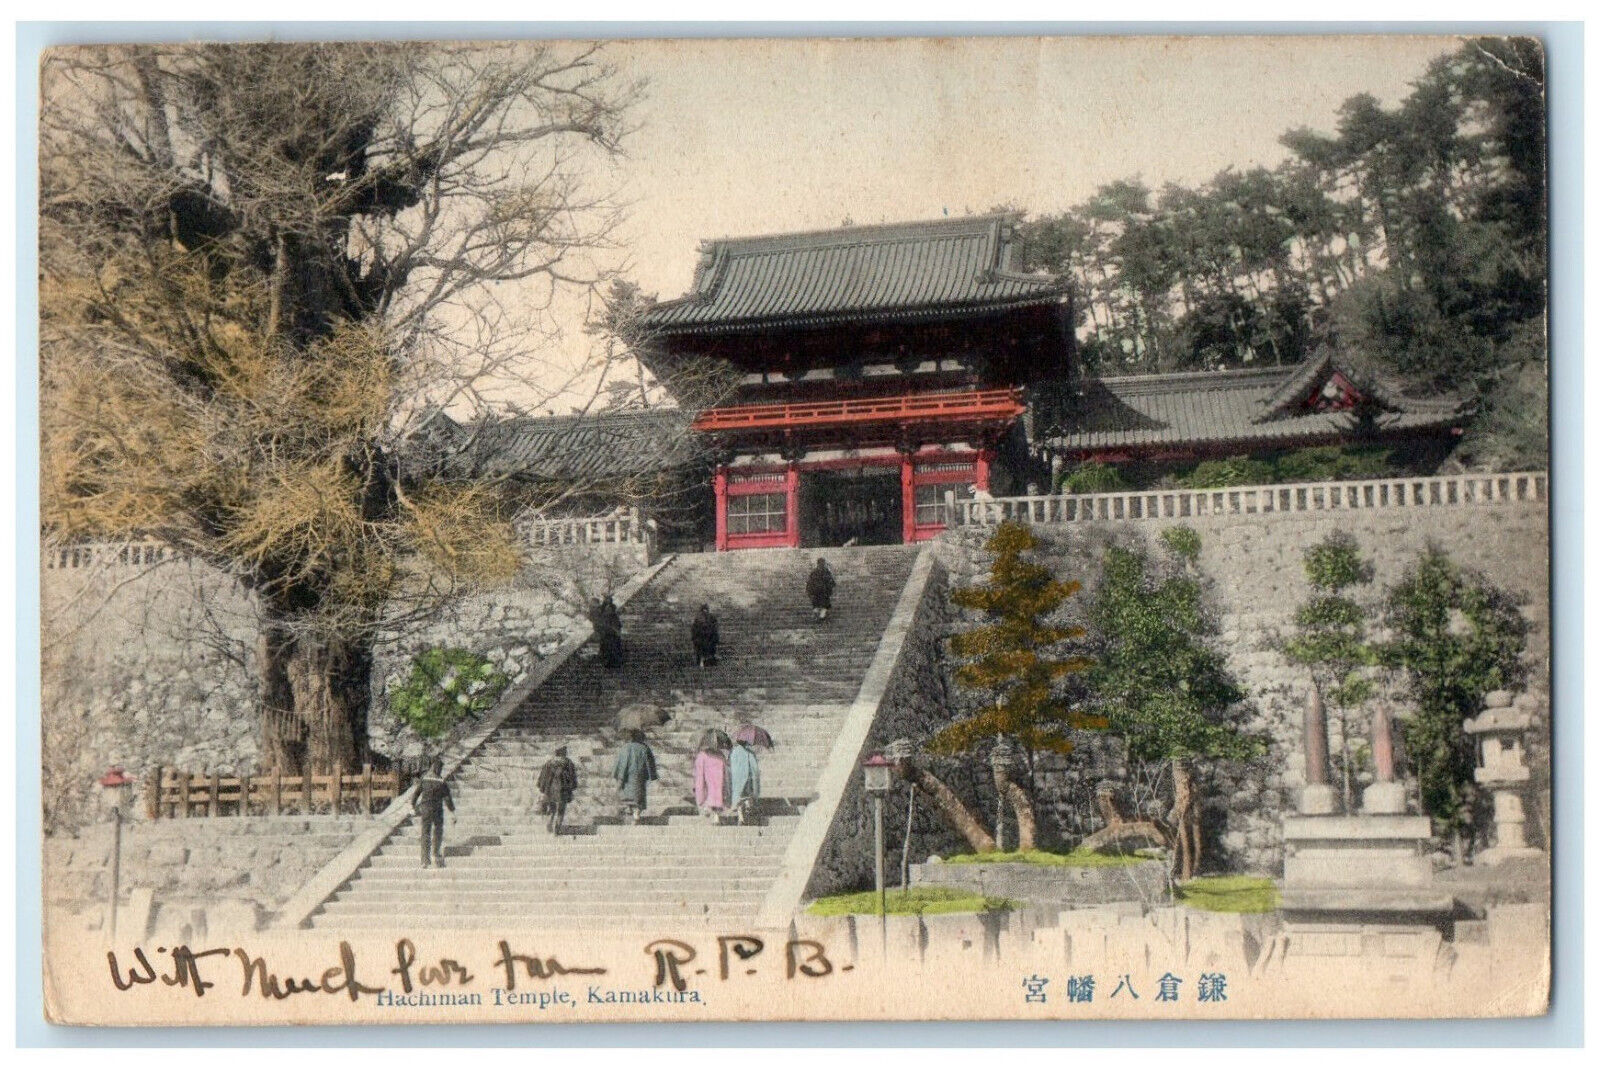 1907 Entrance to Hachiman Temple Kamakura Kanagawa Japan Posted Postcard